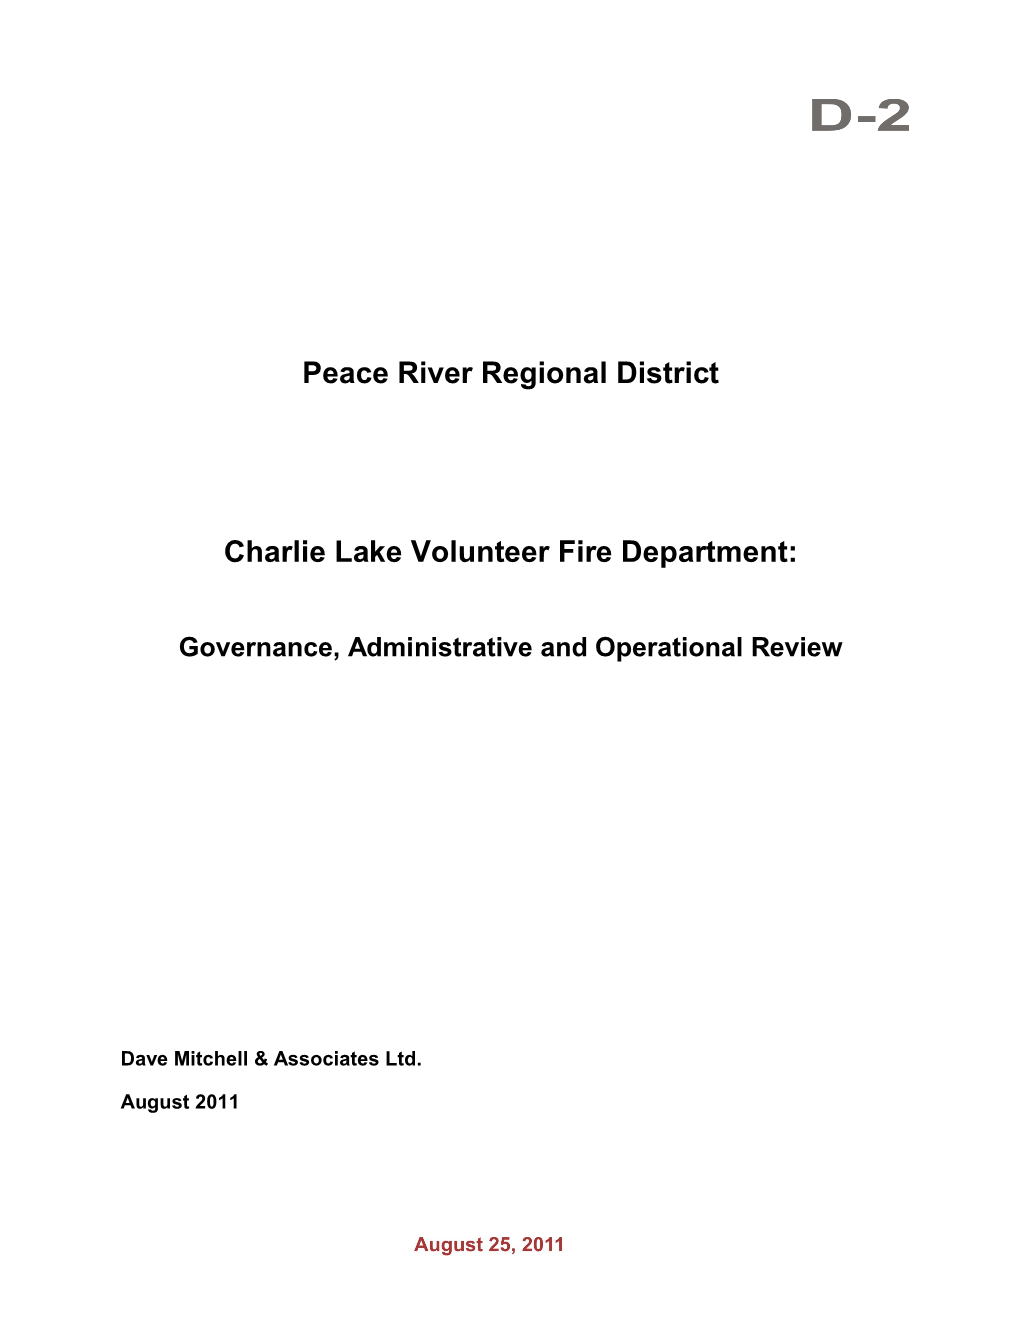 Peace River Regional District Charlie Lake Volunteer Fire Department